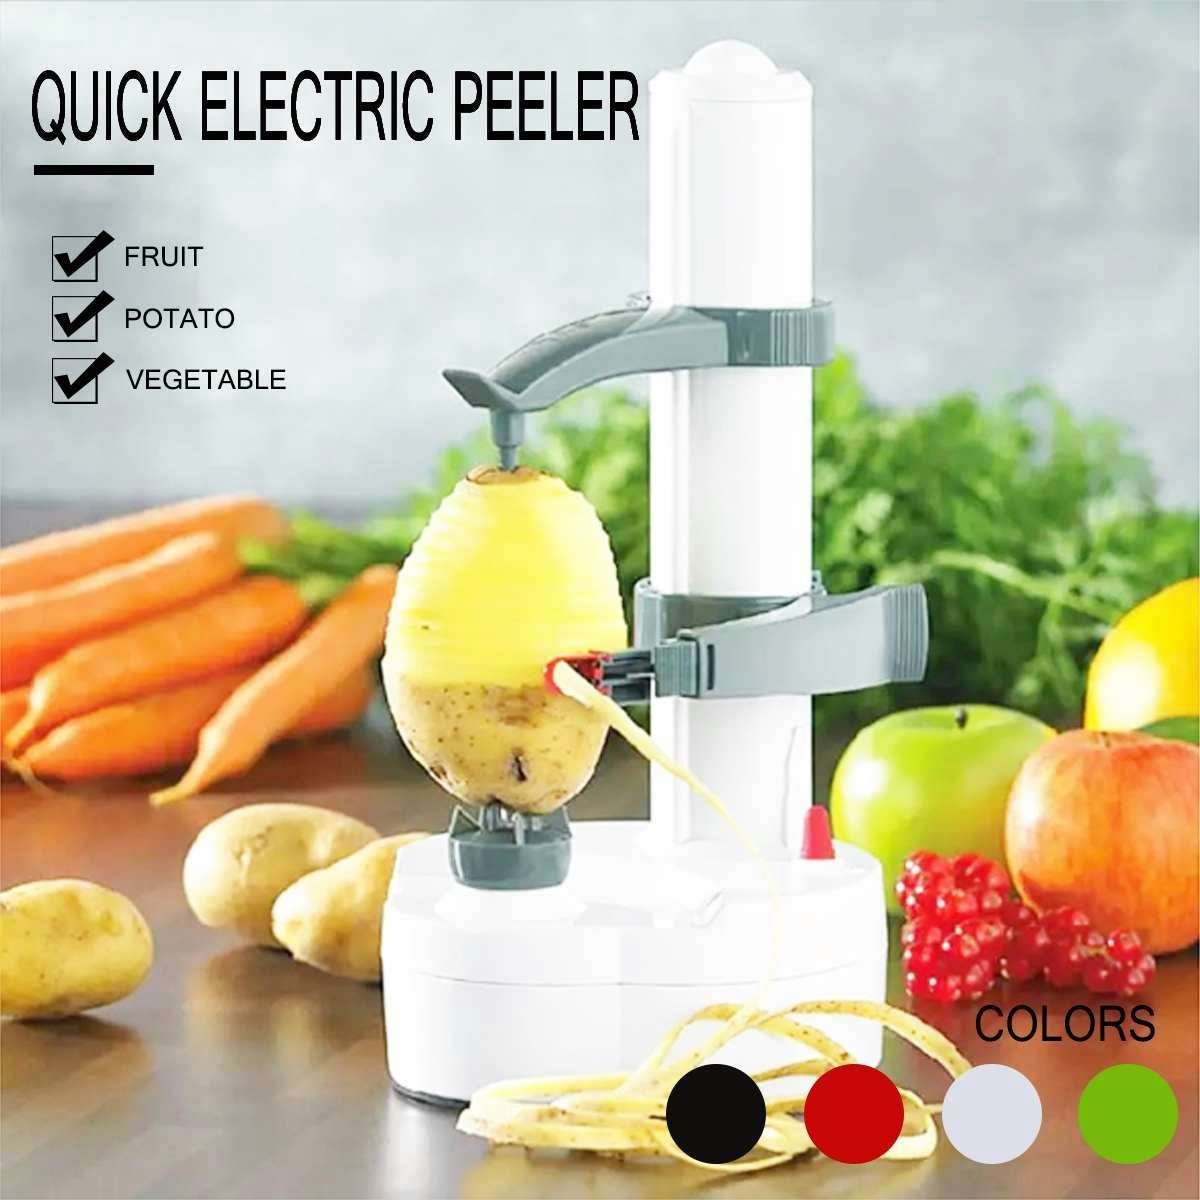 Fruit Peeler Potato Electric Peeler Vegetable Fruit Peeler Stainless Steel*Blade